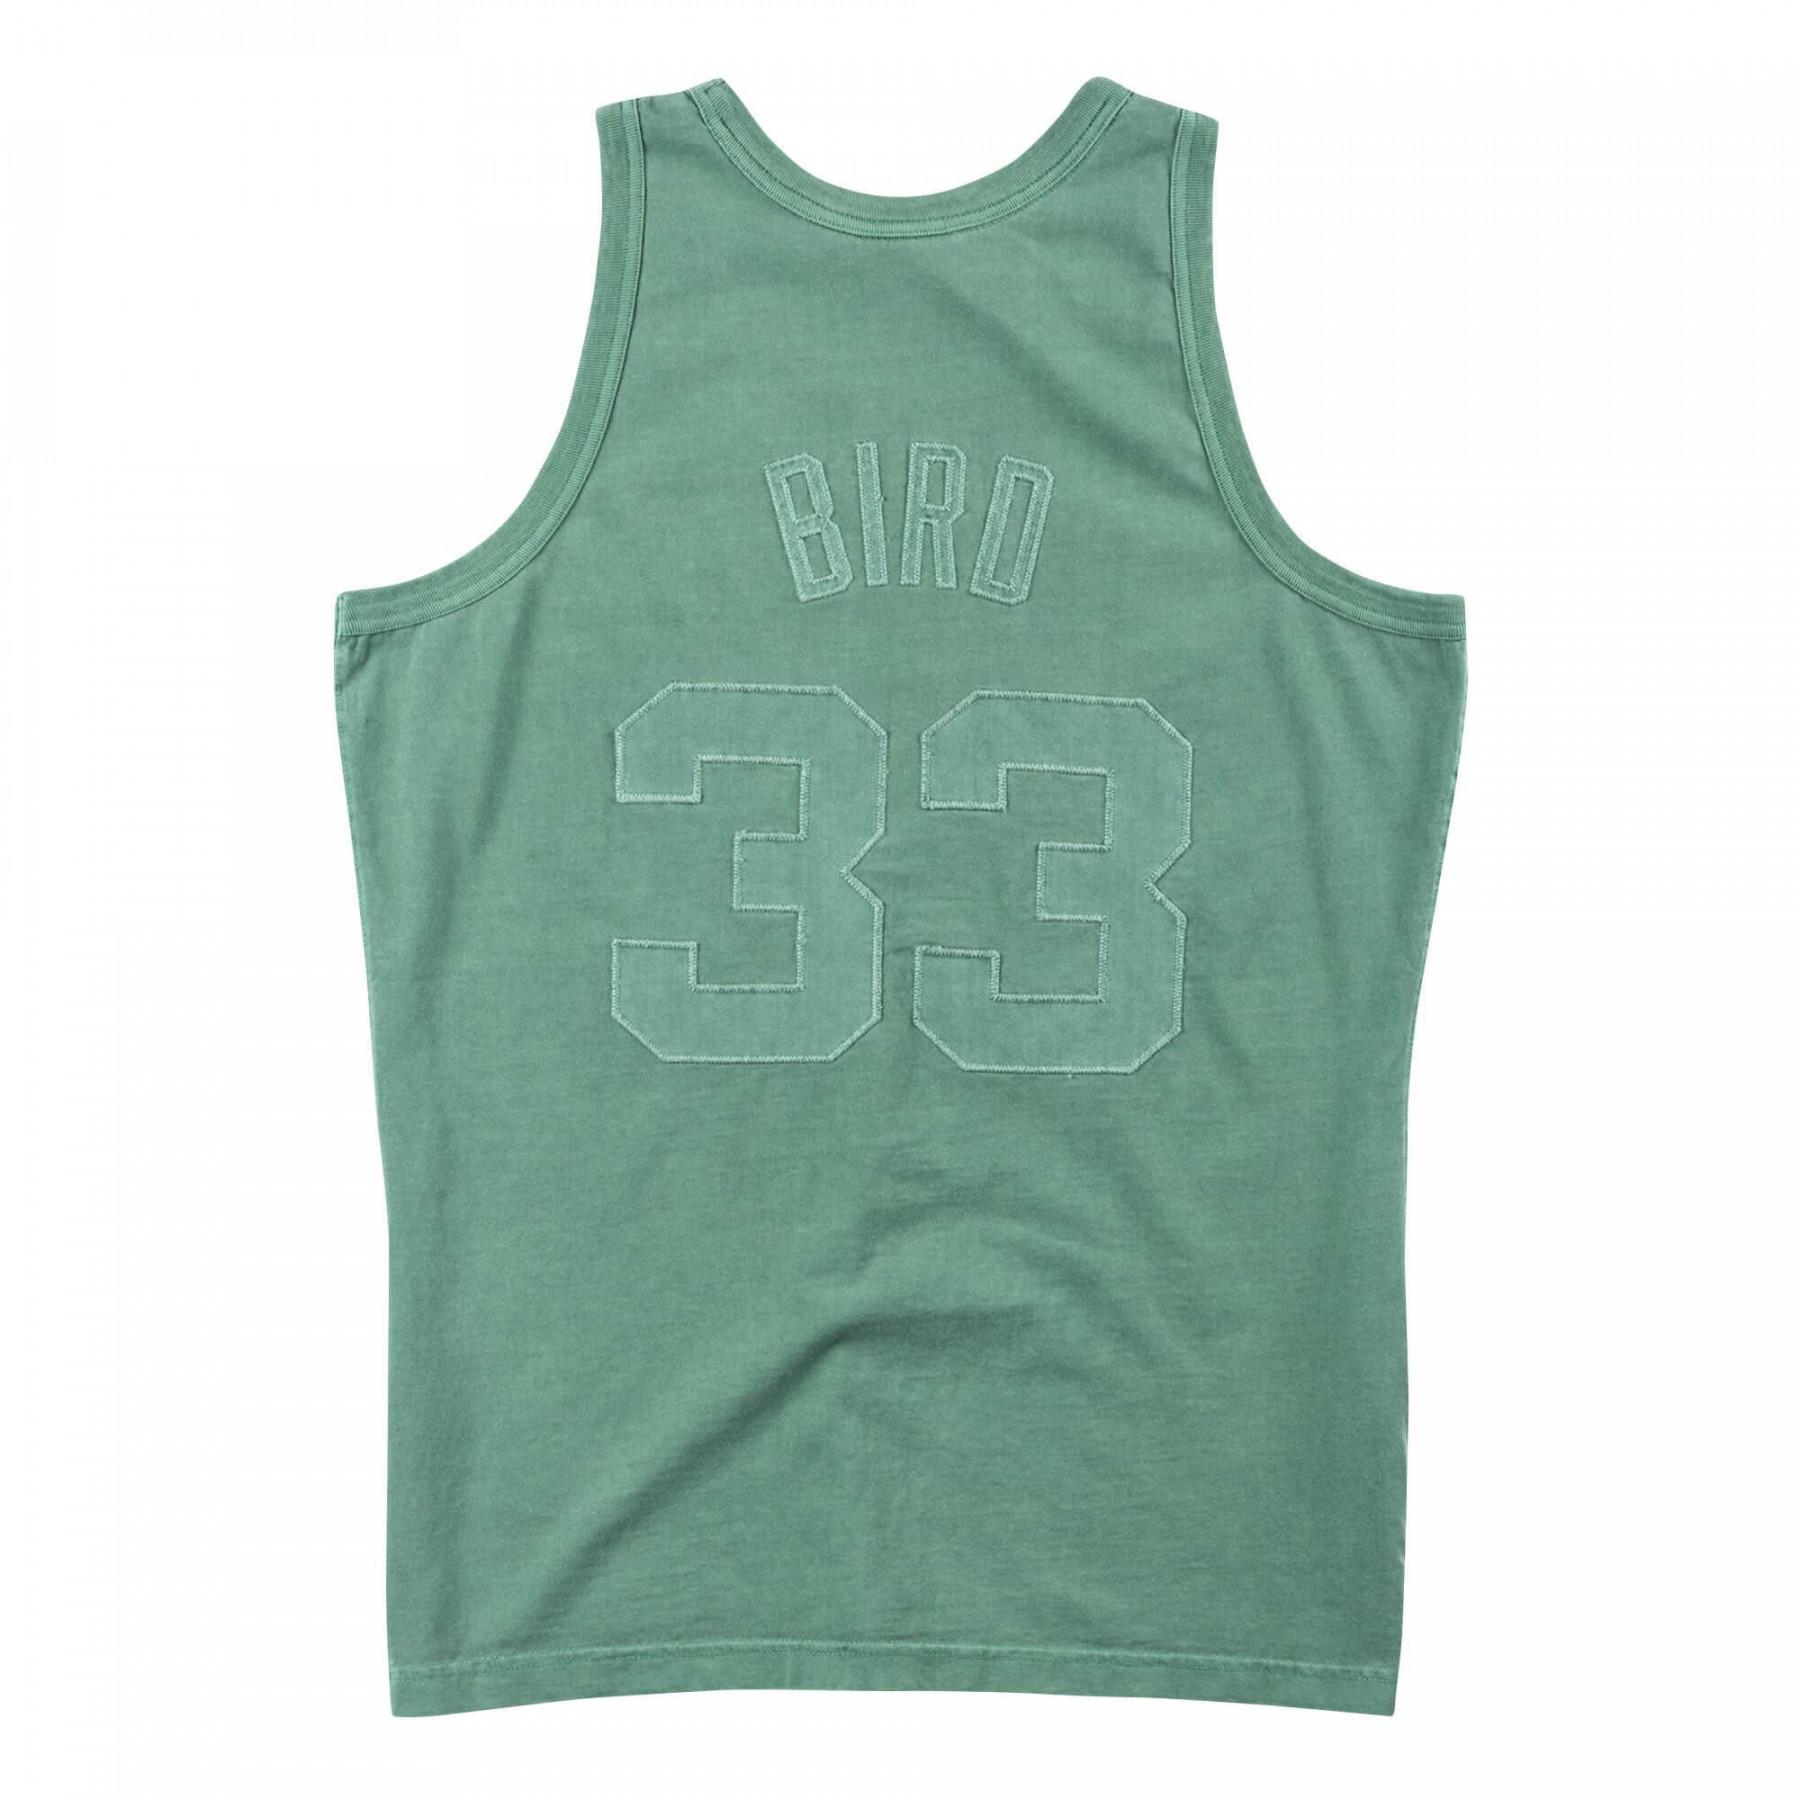  Mitchell & NessM a i l l o t   Washed Out Larry Bird Boston Celtics